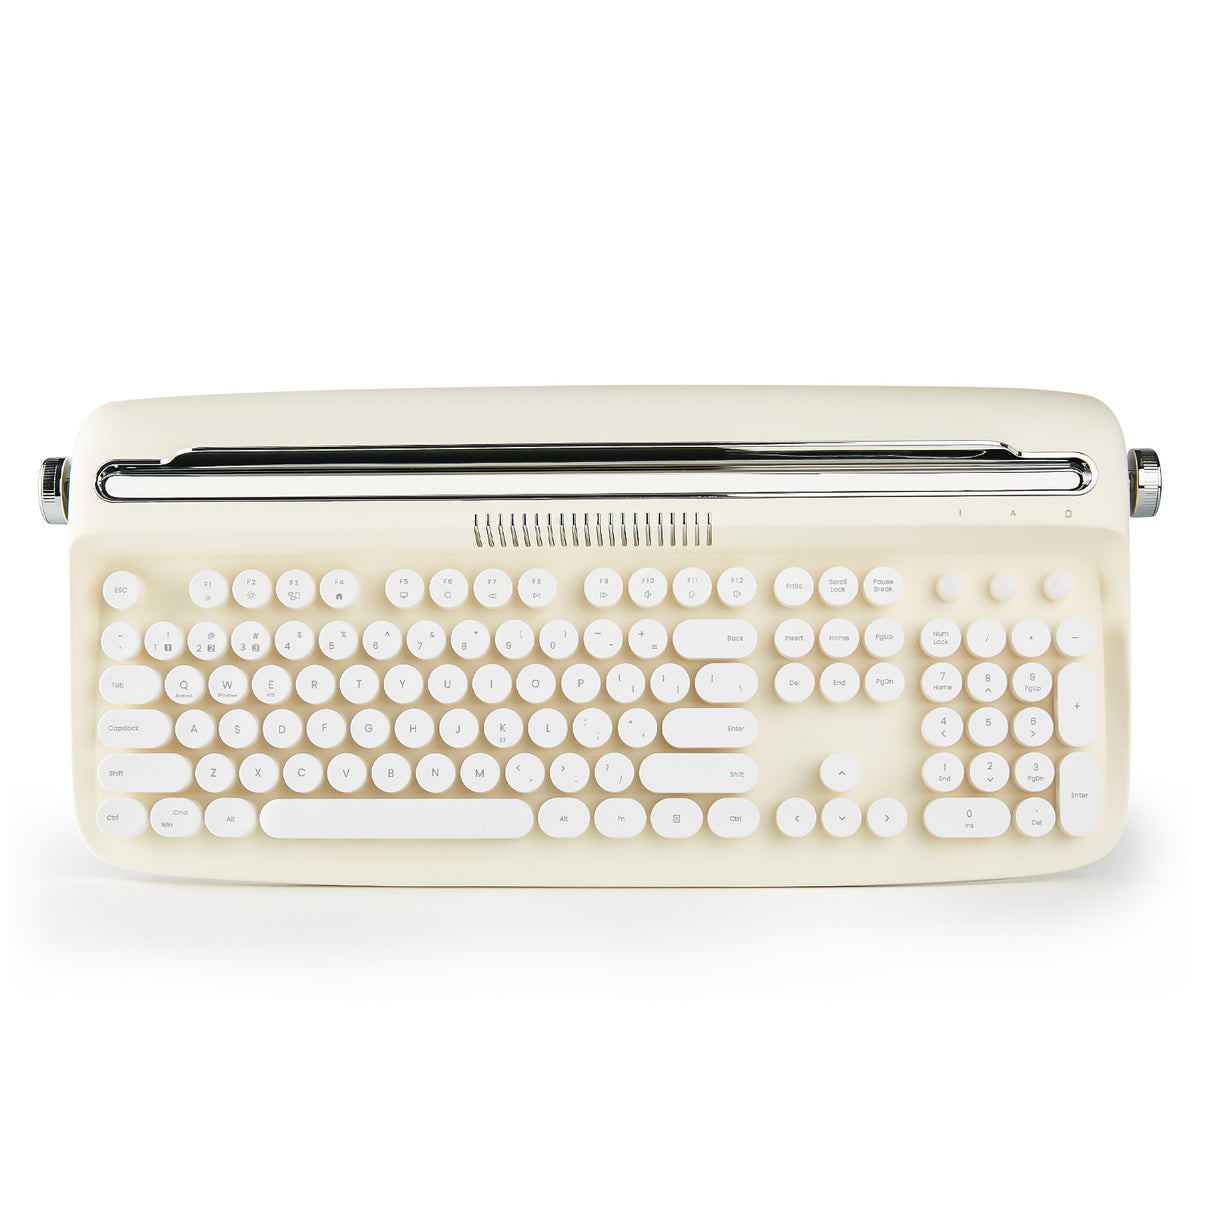 YUNZII ACTTO B503 Wireless Keyboard - Snow White